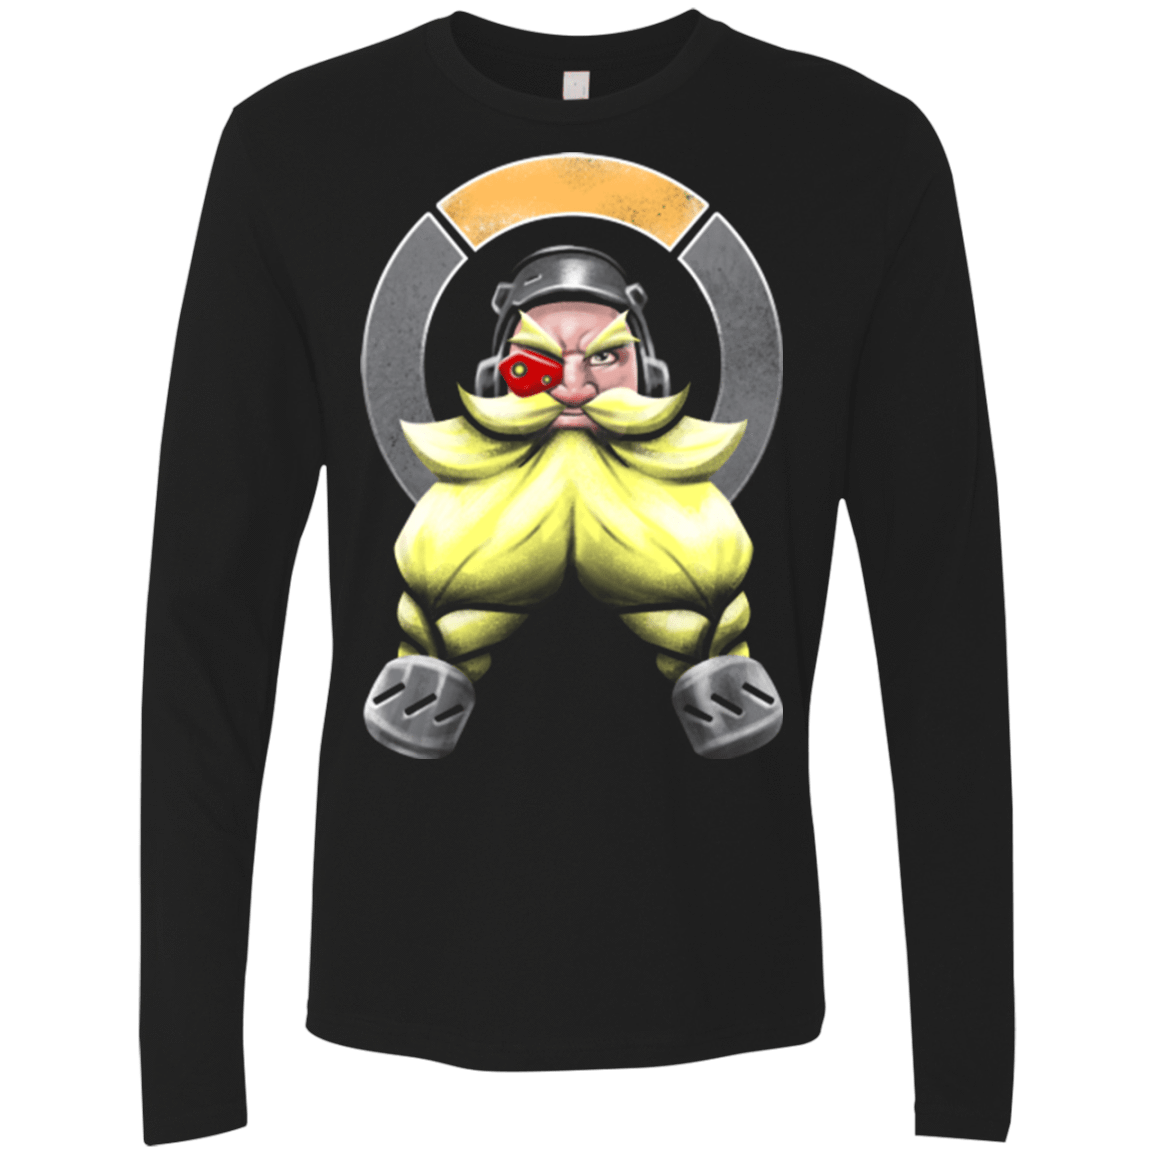 T-Shirts Black / Small The Engineer Men's Premium Long Sleeve